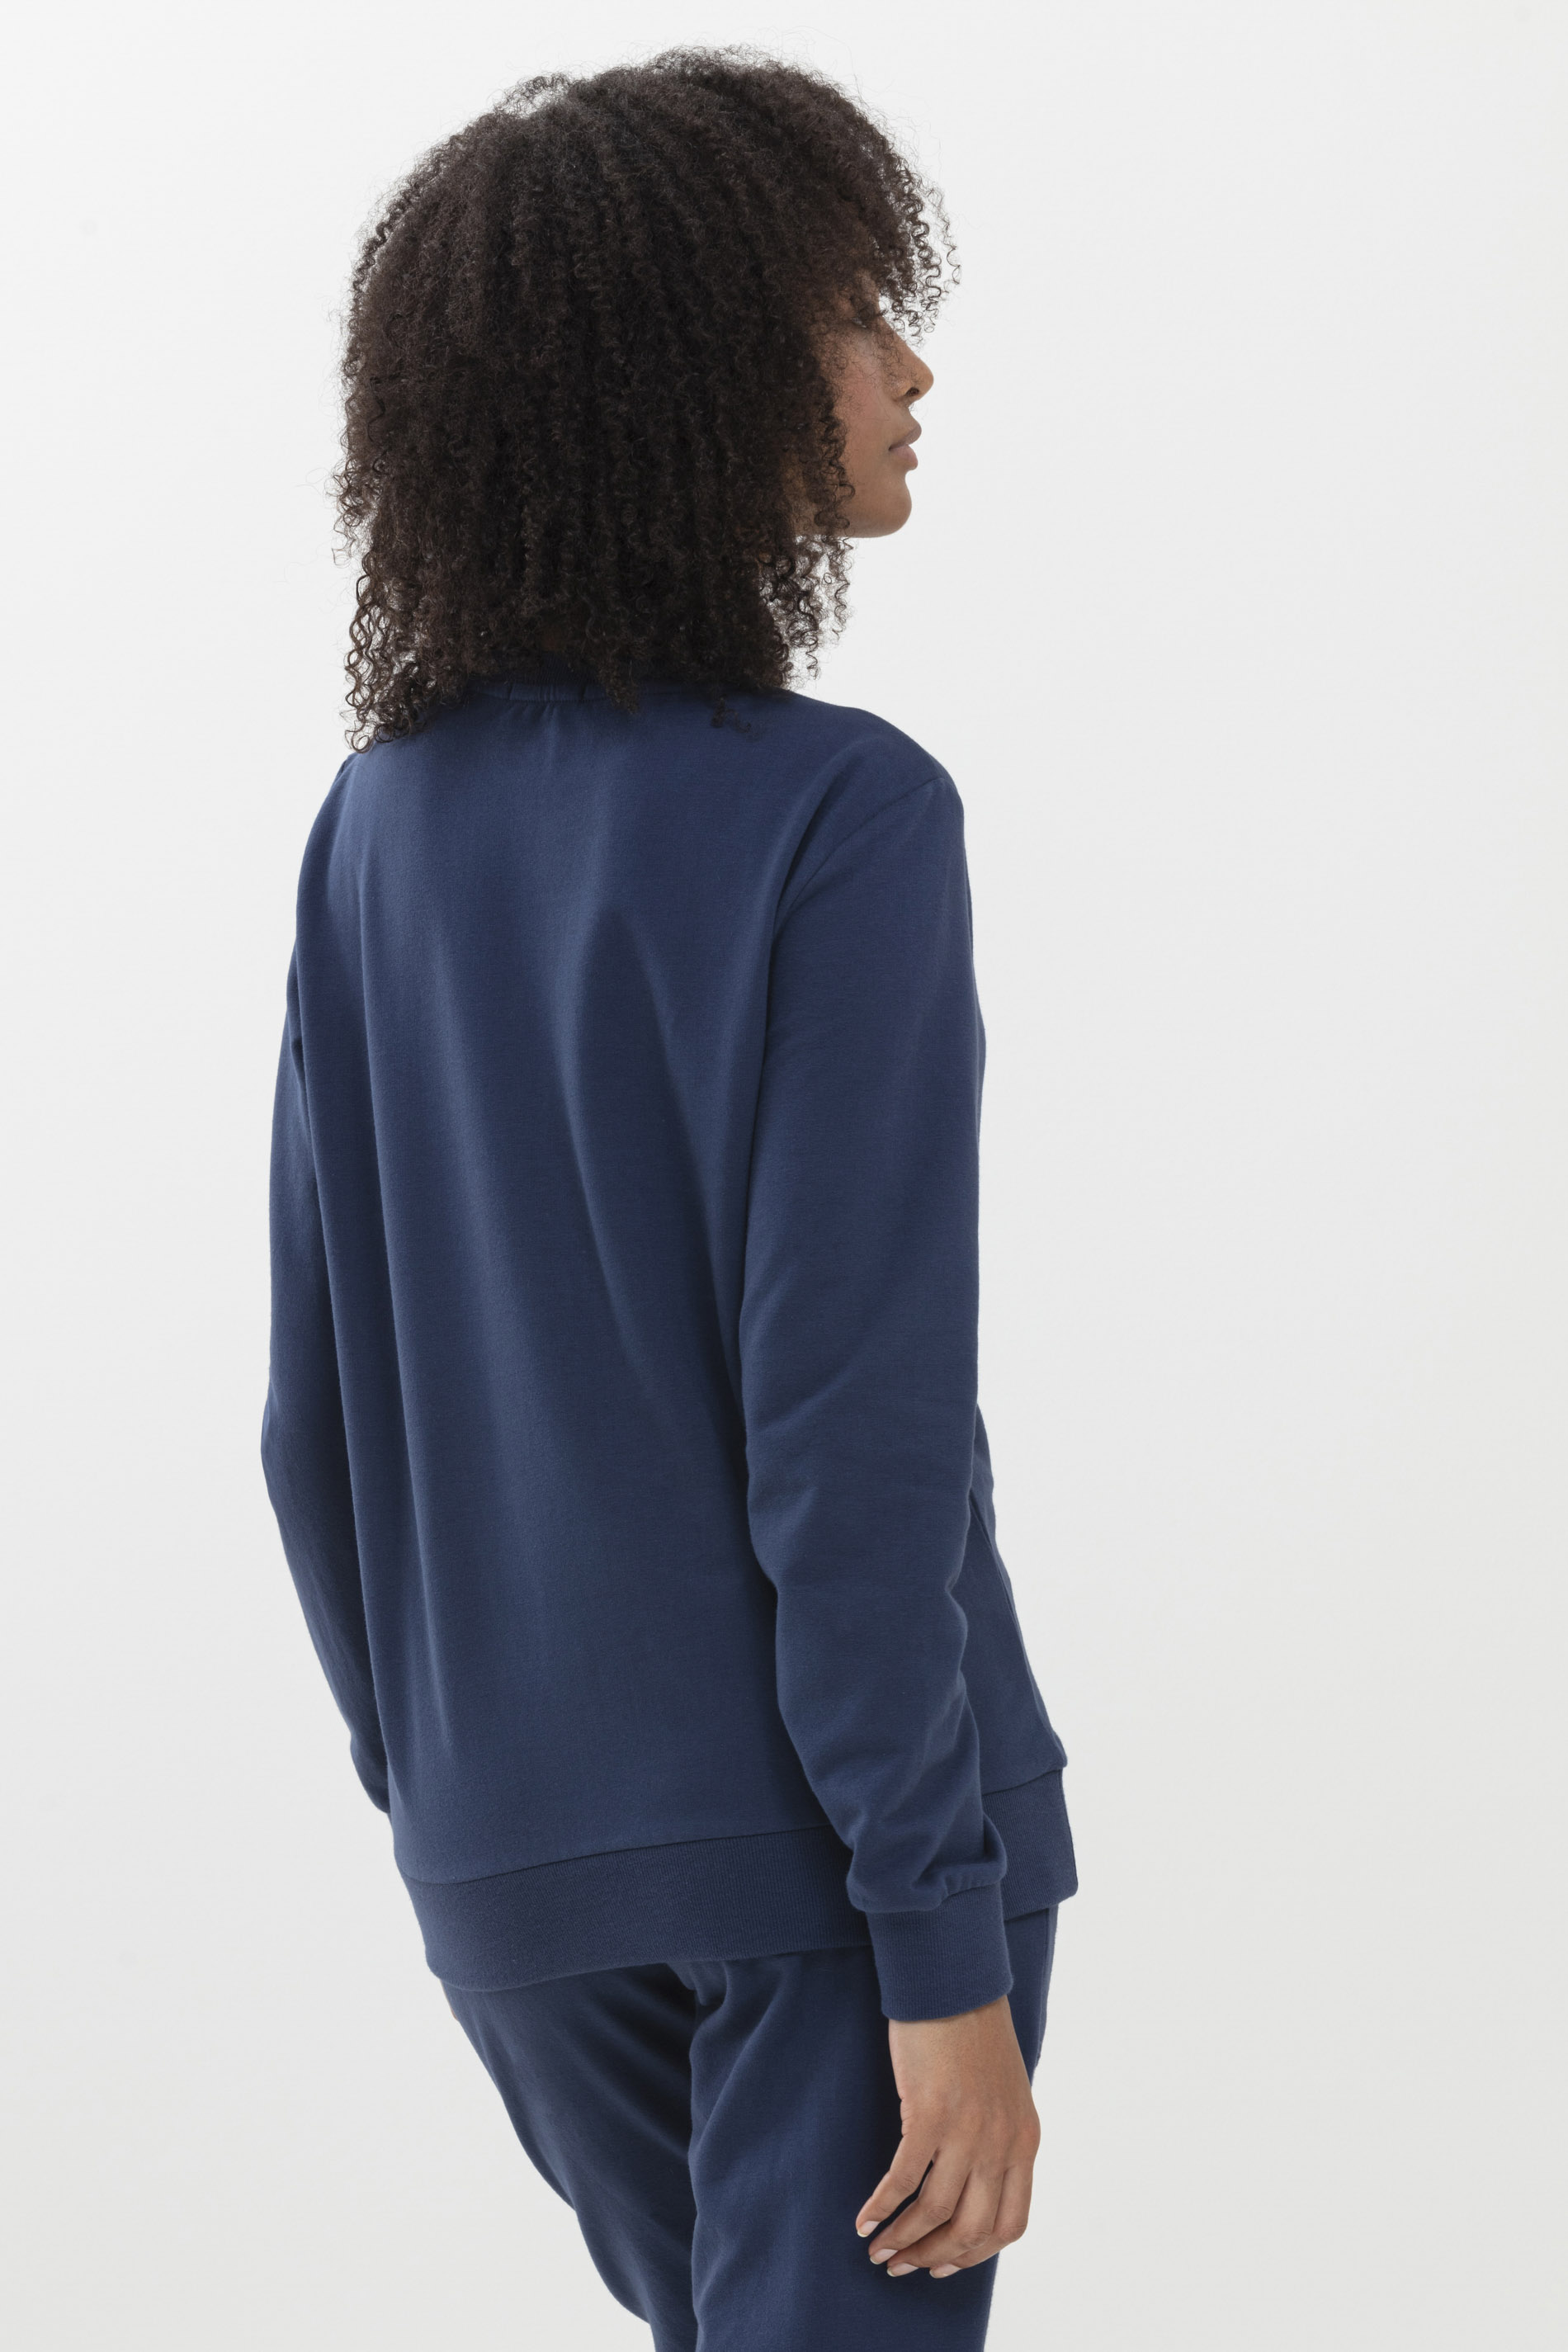 Sweater New Blue Serie Mia Rear View | mey®